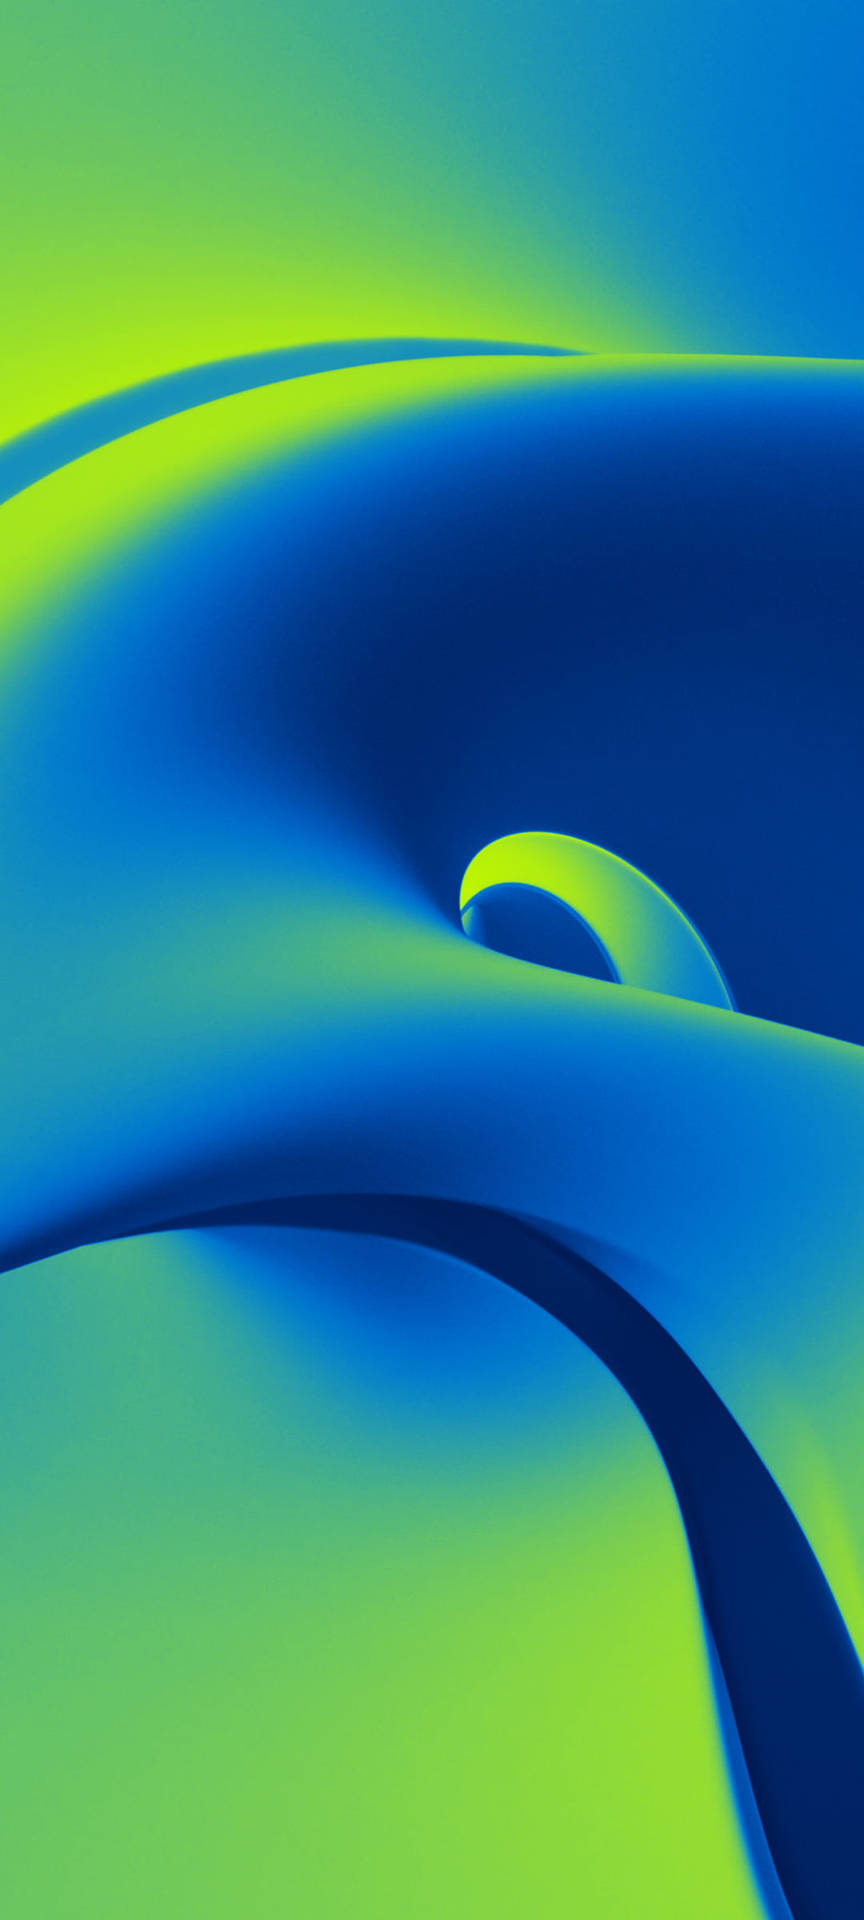 POCO X2 Blue-Green Wave Wallpaper